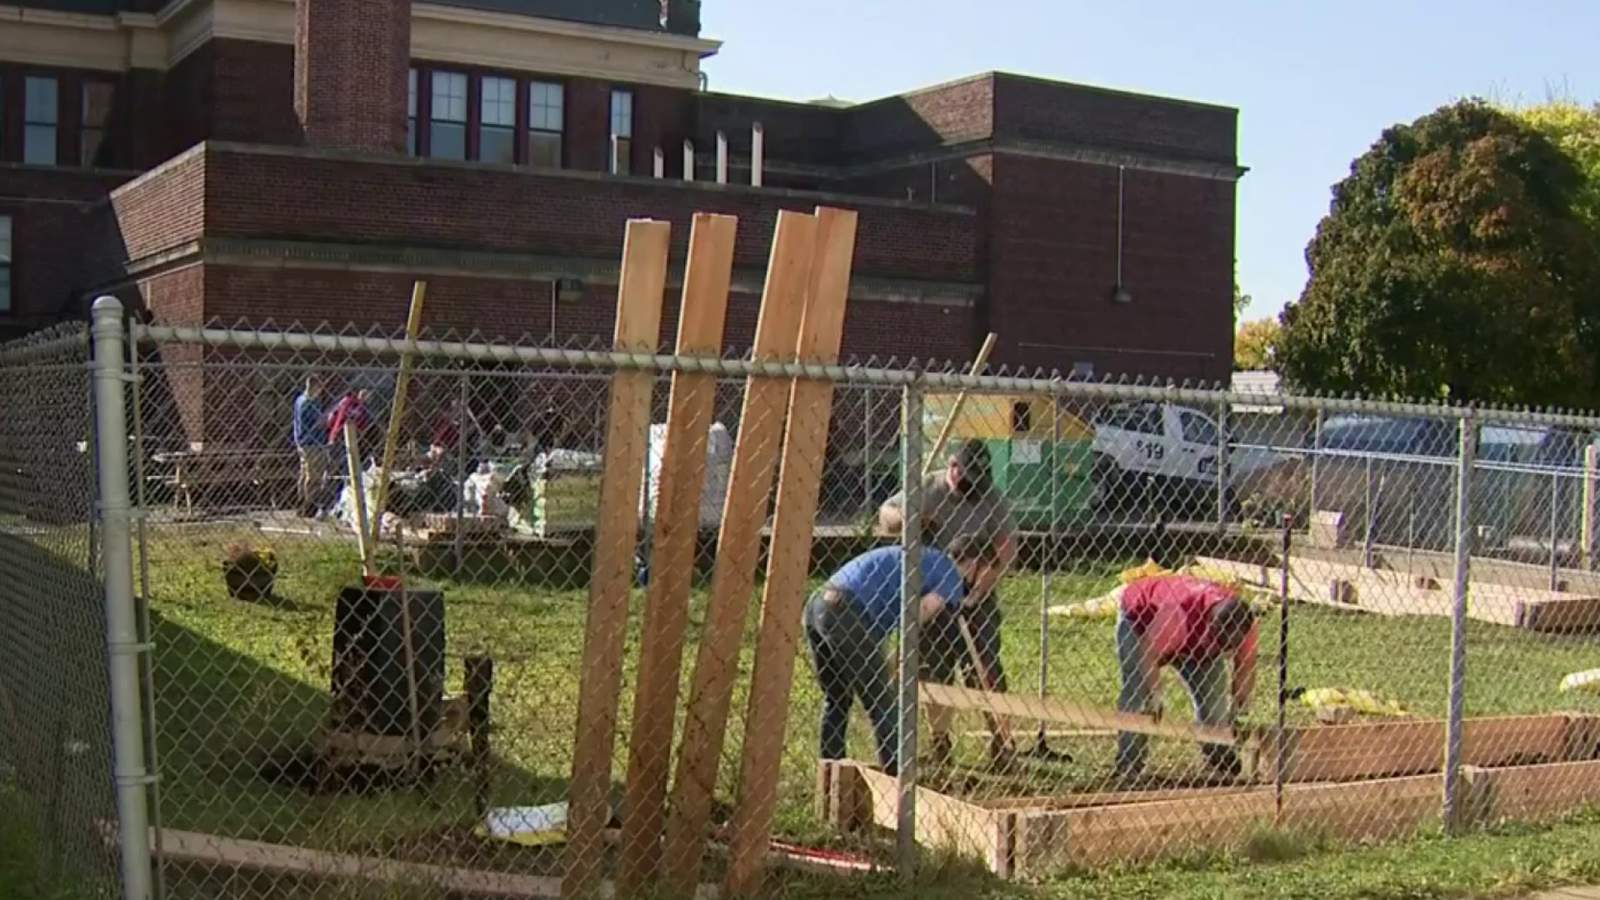 Reading garden restored at Detroit school after vandalism